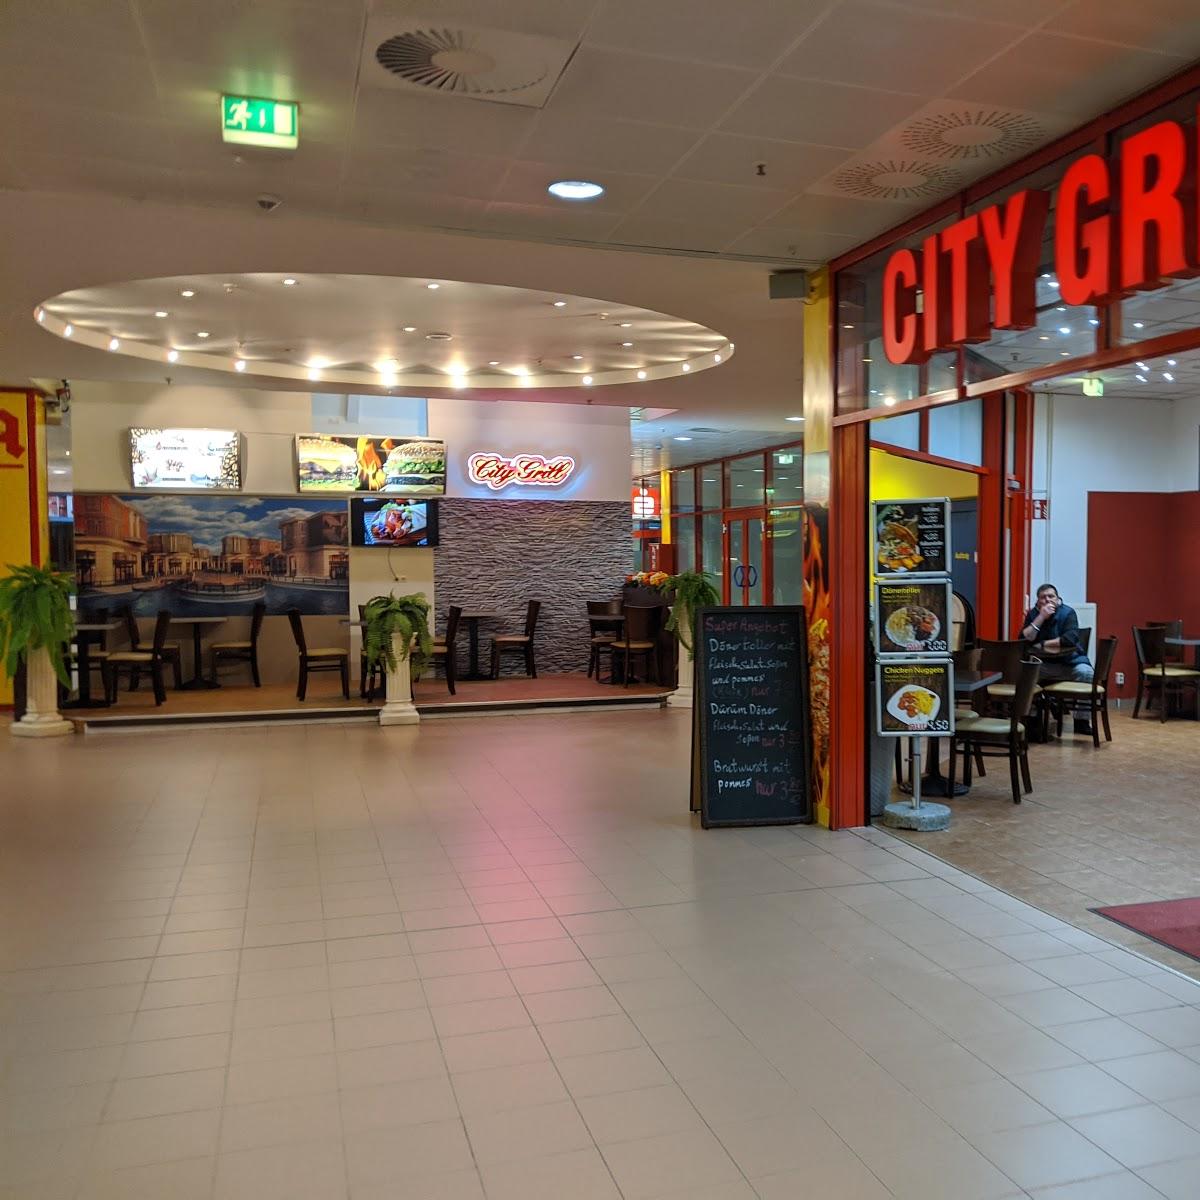 Restaurant "City Grill" in Frankfurt (Oder)